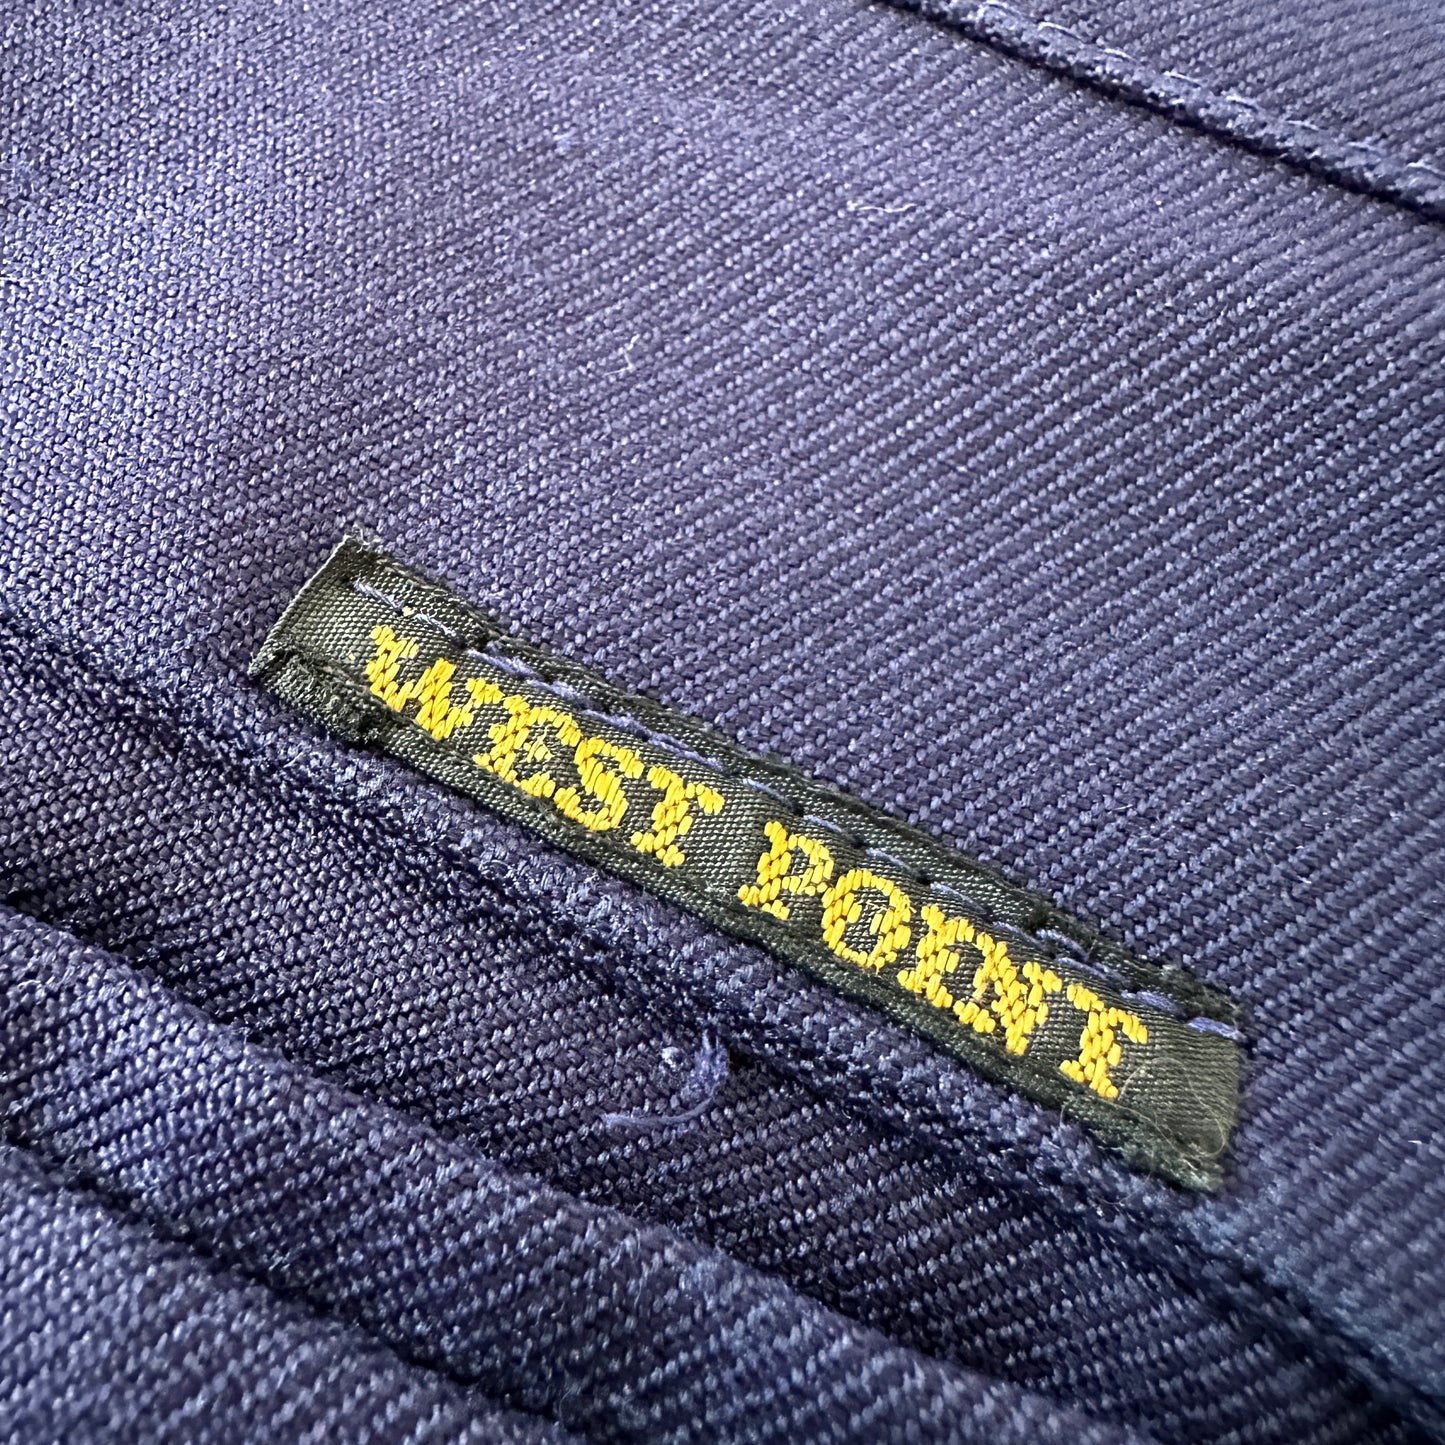 West Point Vintage Tennis Shorts - M